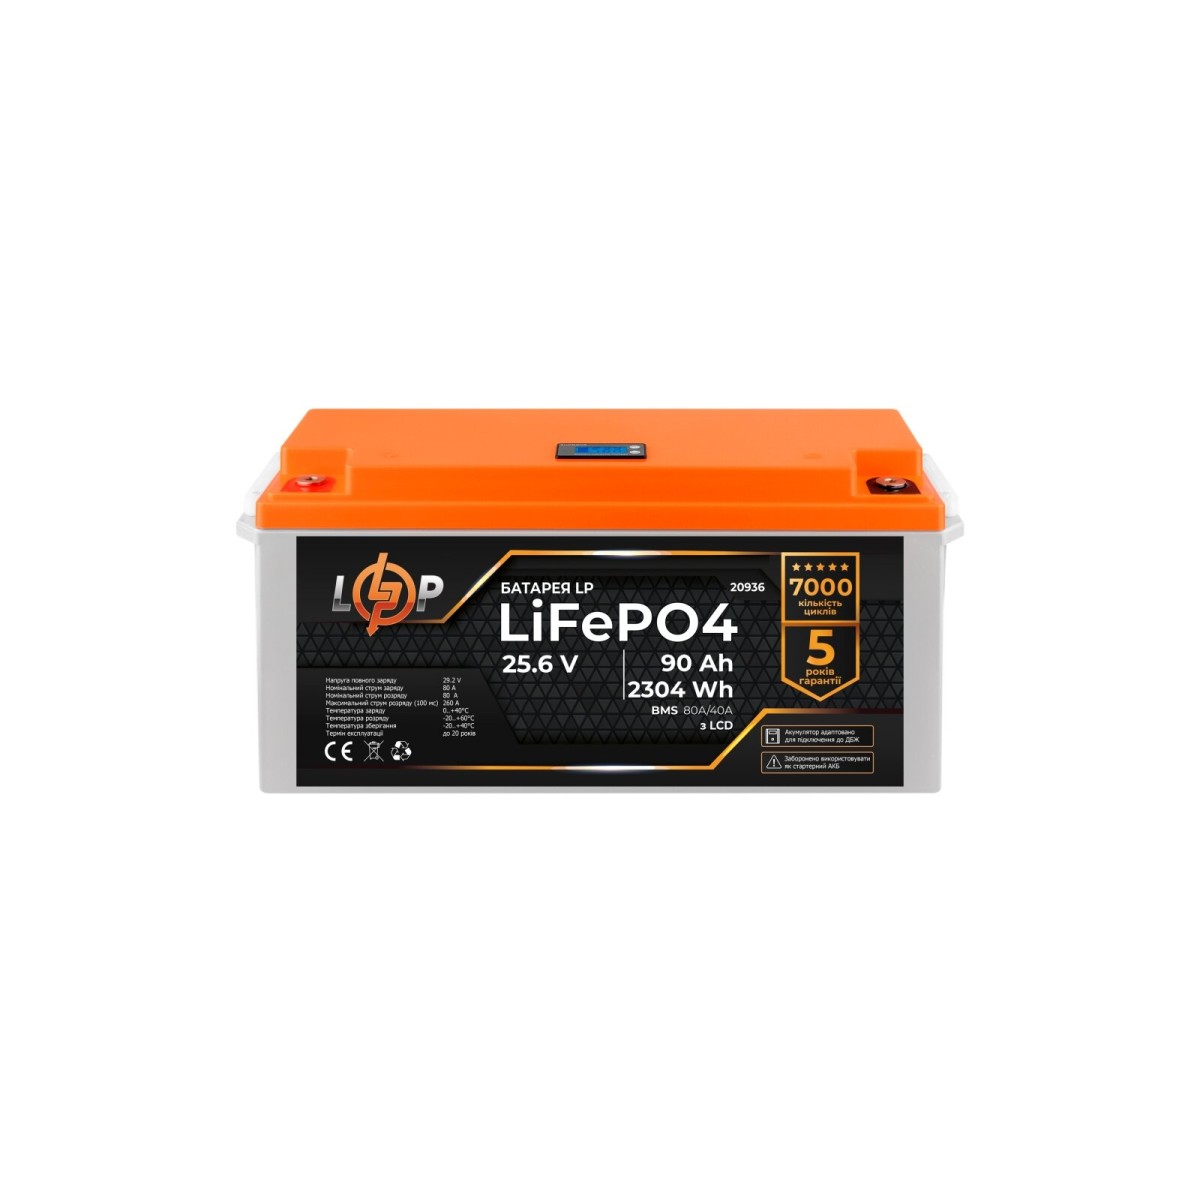 Аккумулятор LP LiFePO4 для ИБП LCD 24V (25,6V) - 90 Ah (2304Wh) (BMS 80A/40A) пластик 256_256.jpg